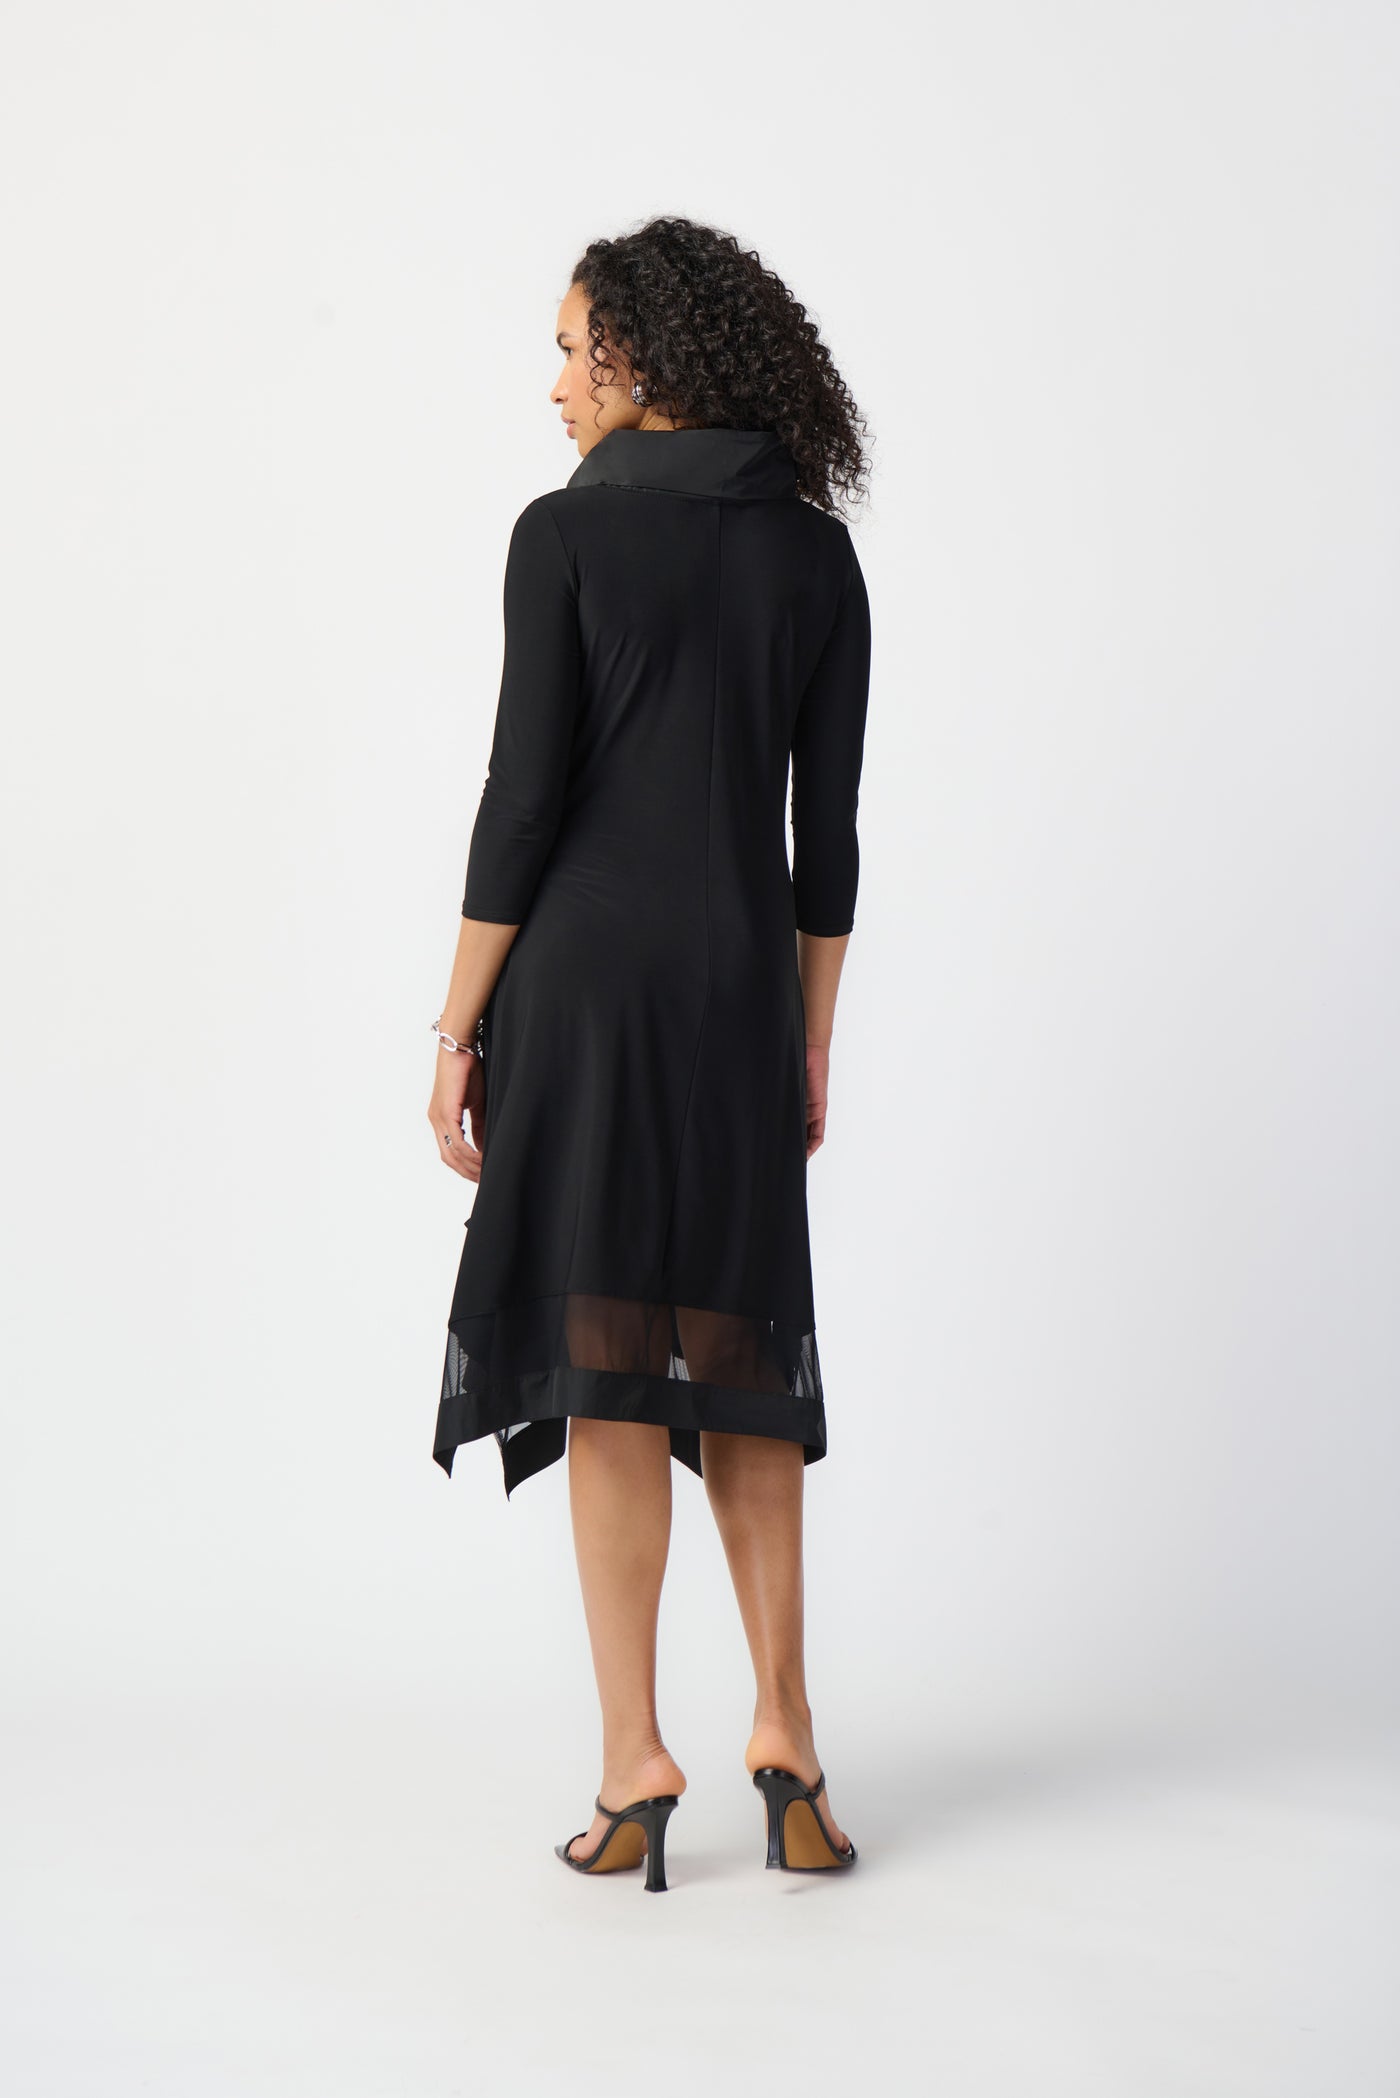 Joseph Ribkoff Cowl Neck Black Dress With Mesh Detailing